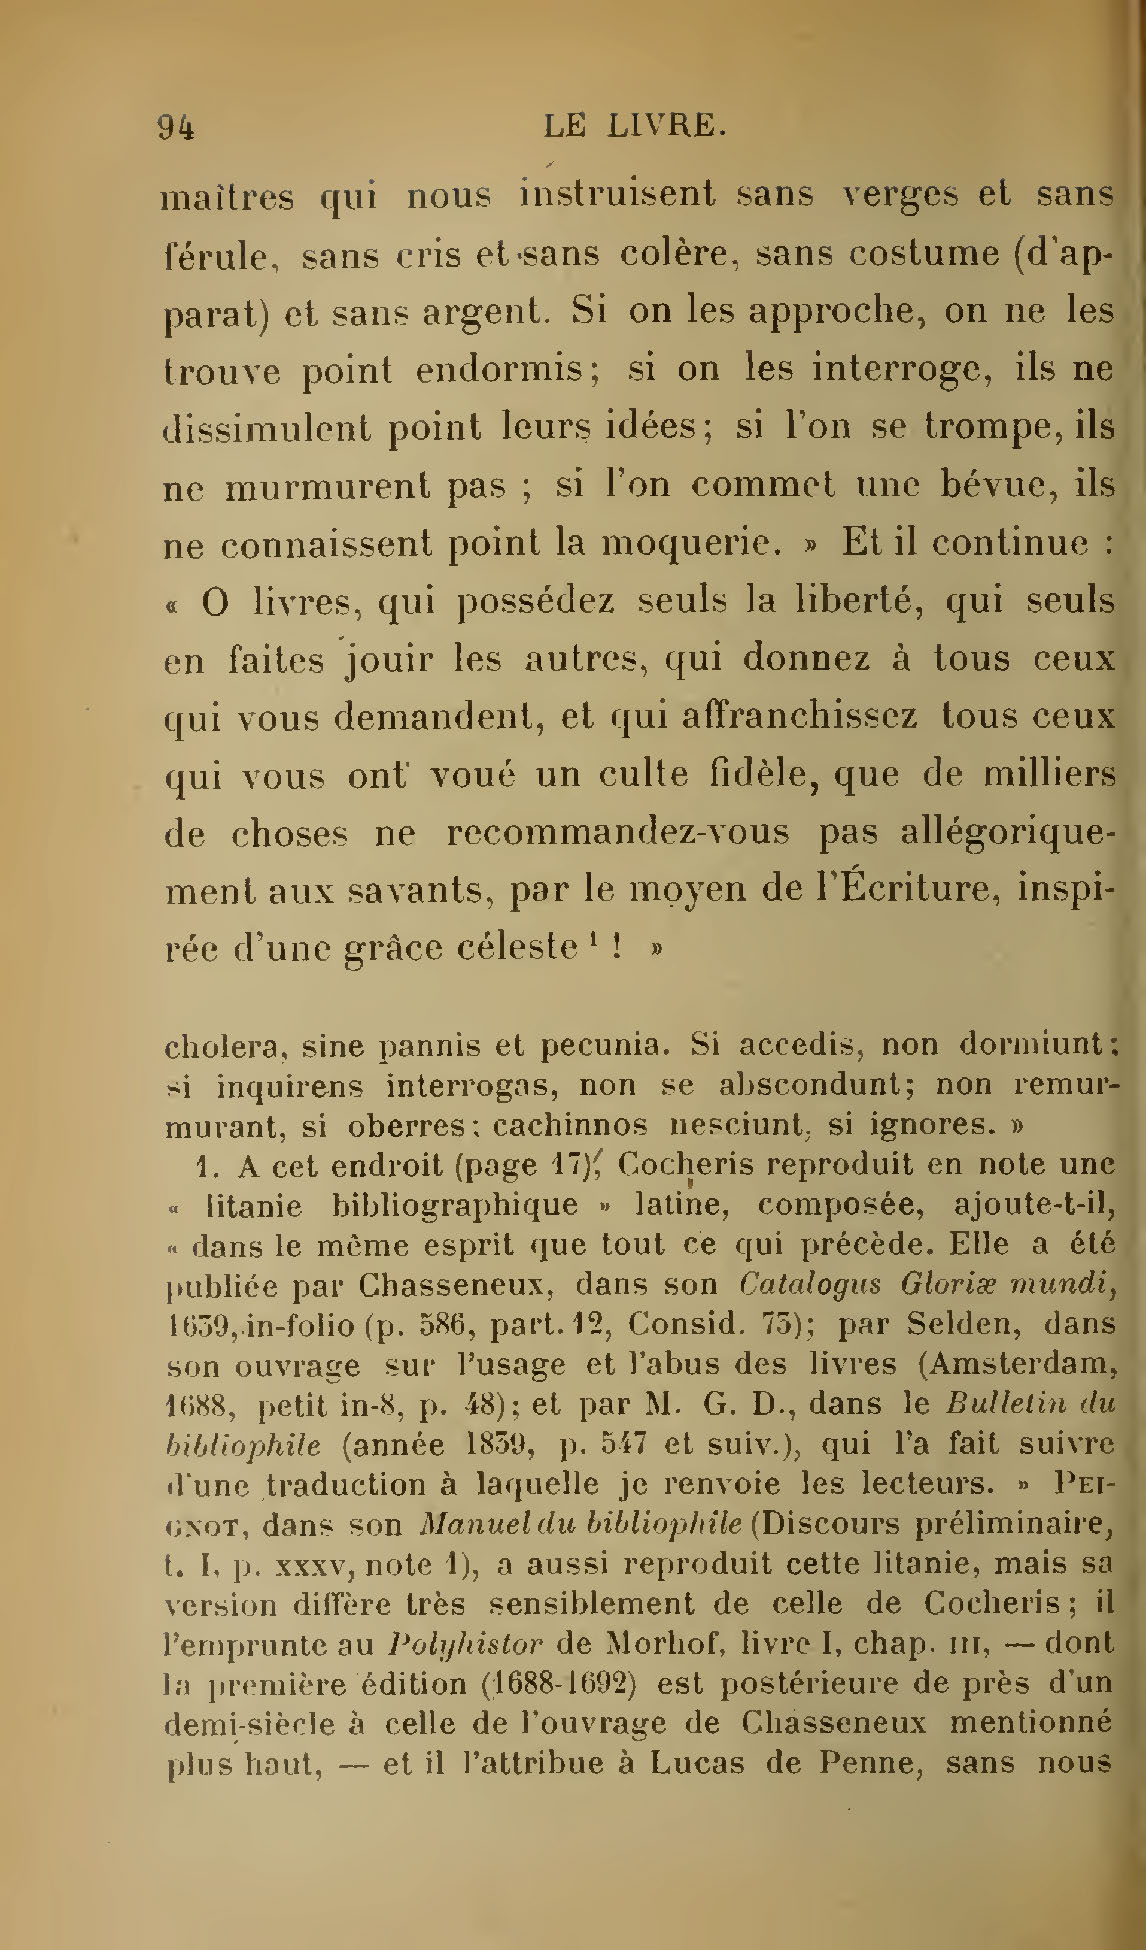 Albert Cim, Le Livre, t. I, p. 94.